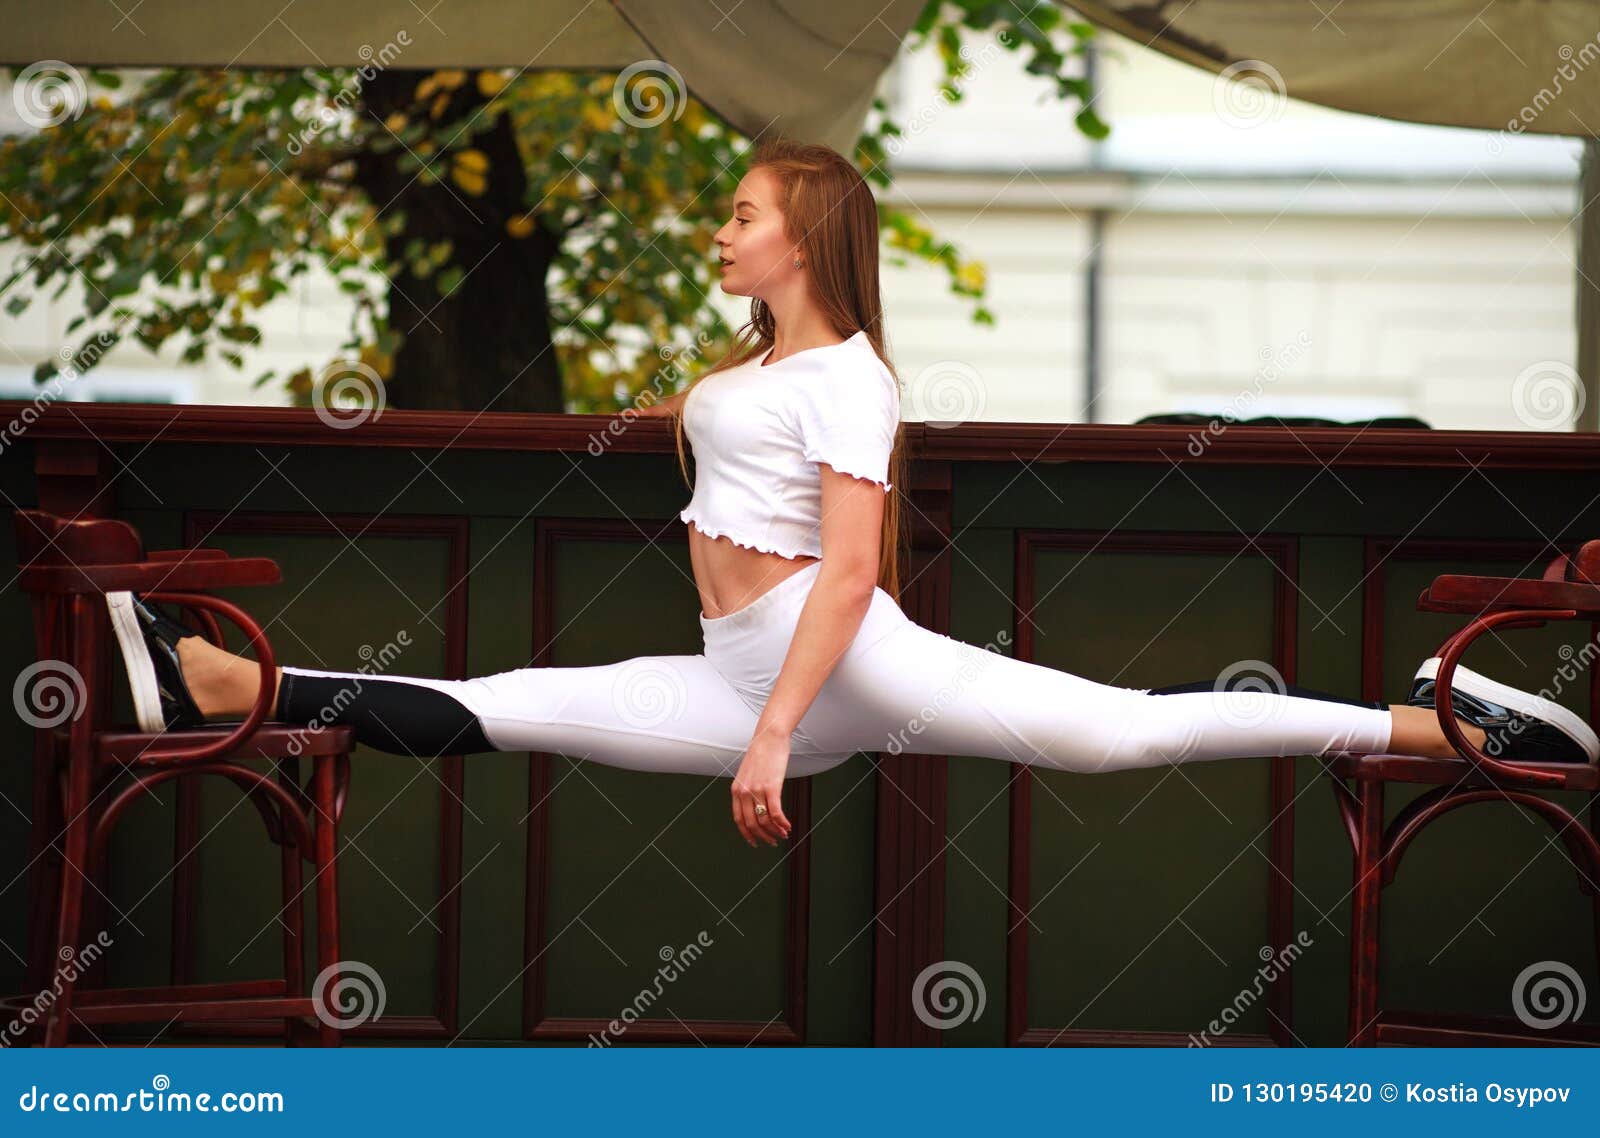 Gymnastics Image